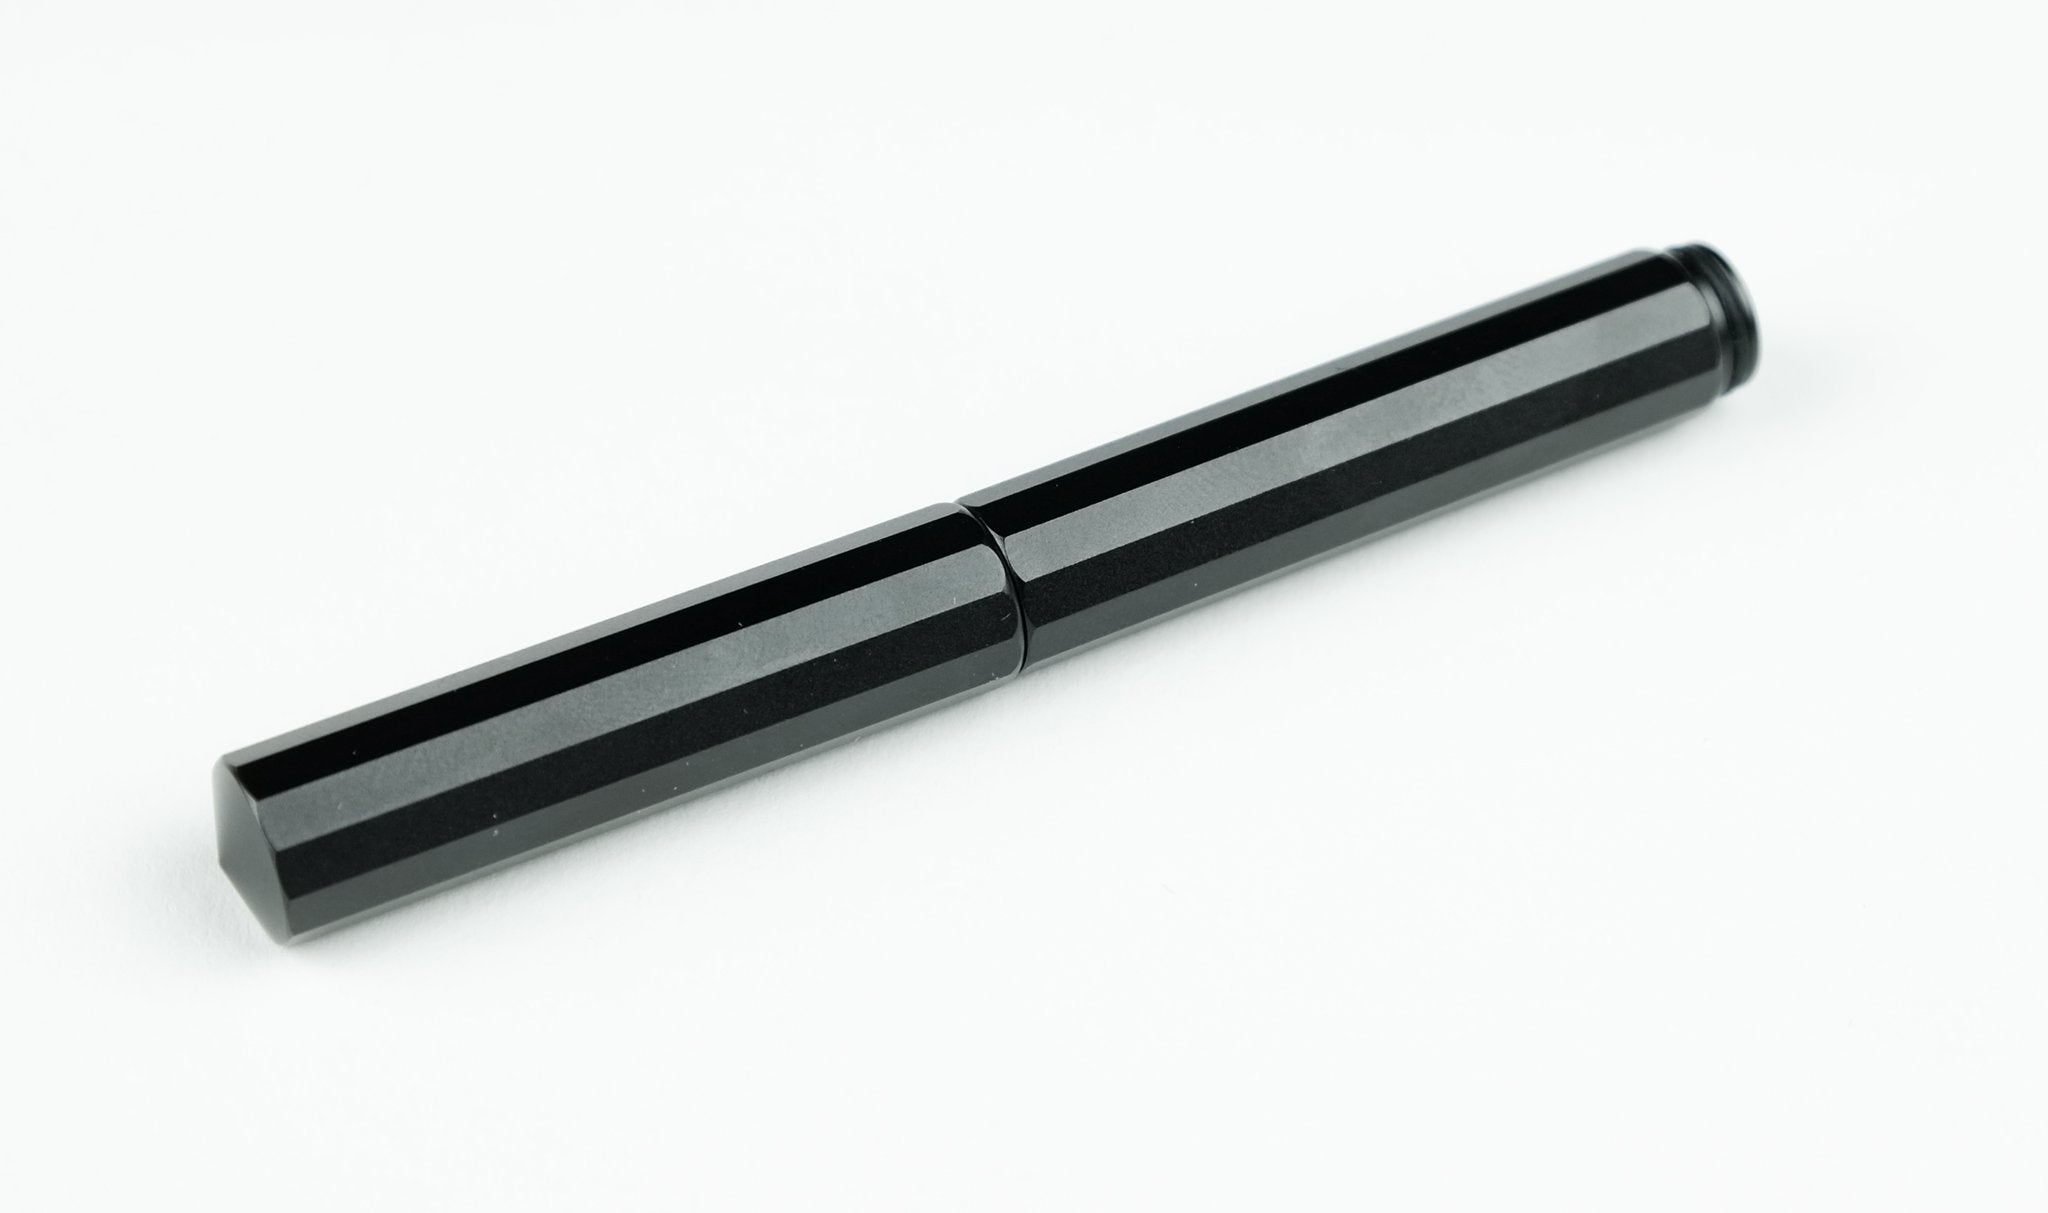 ēnsso XS Minimalist Pocket Fountain Pen - Black Aluminum